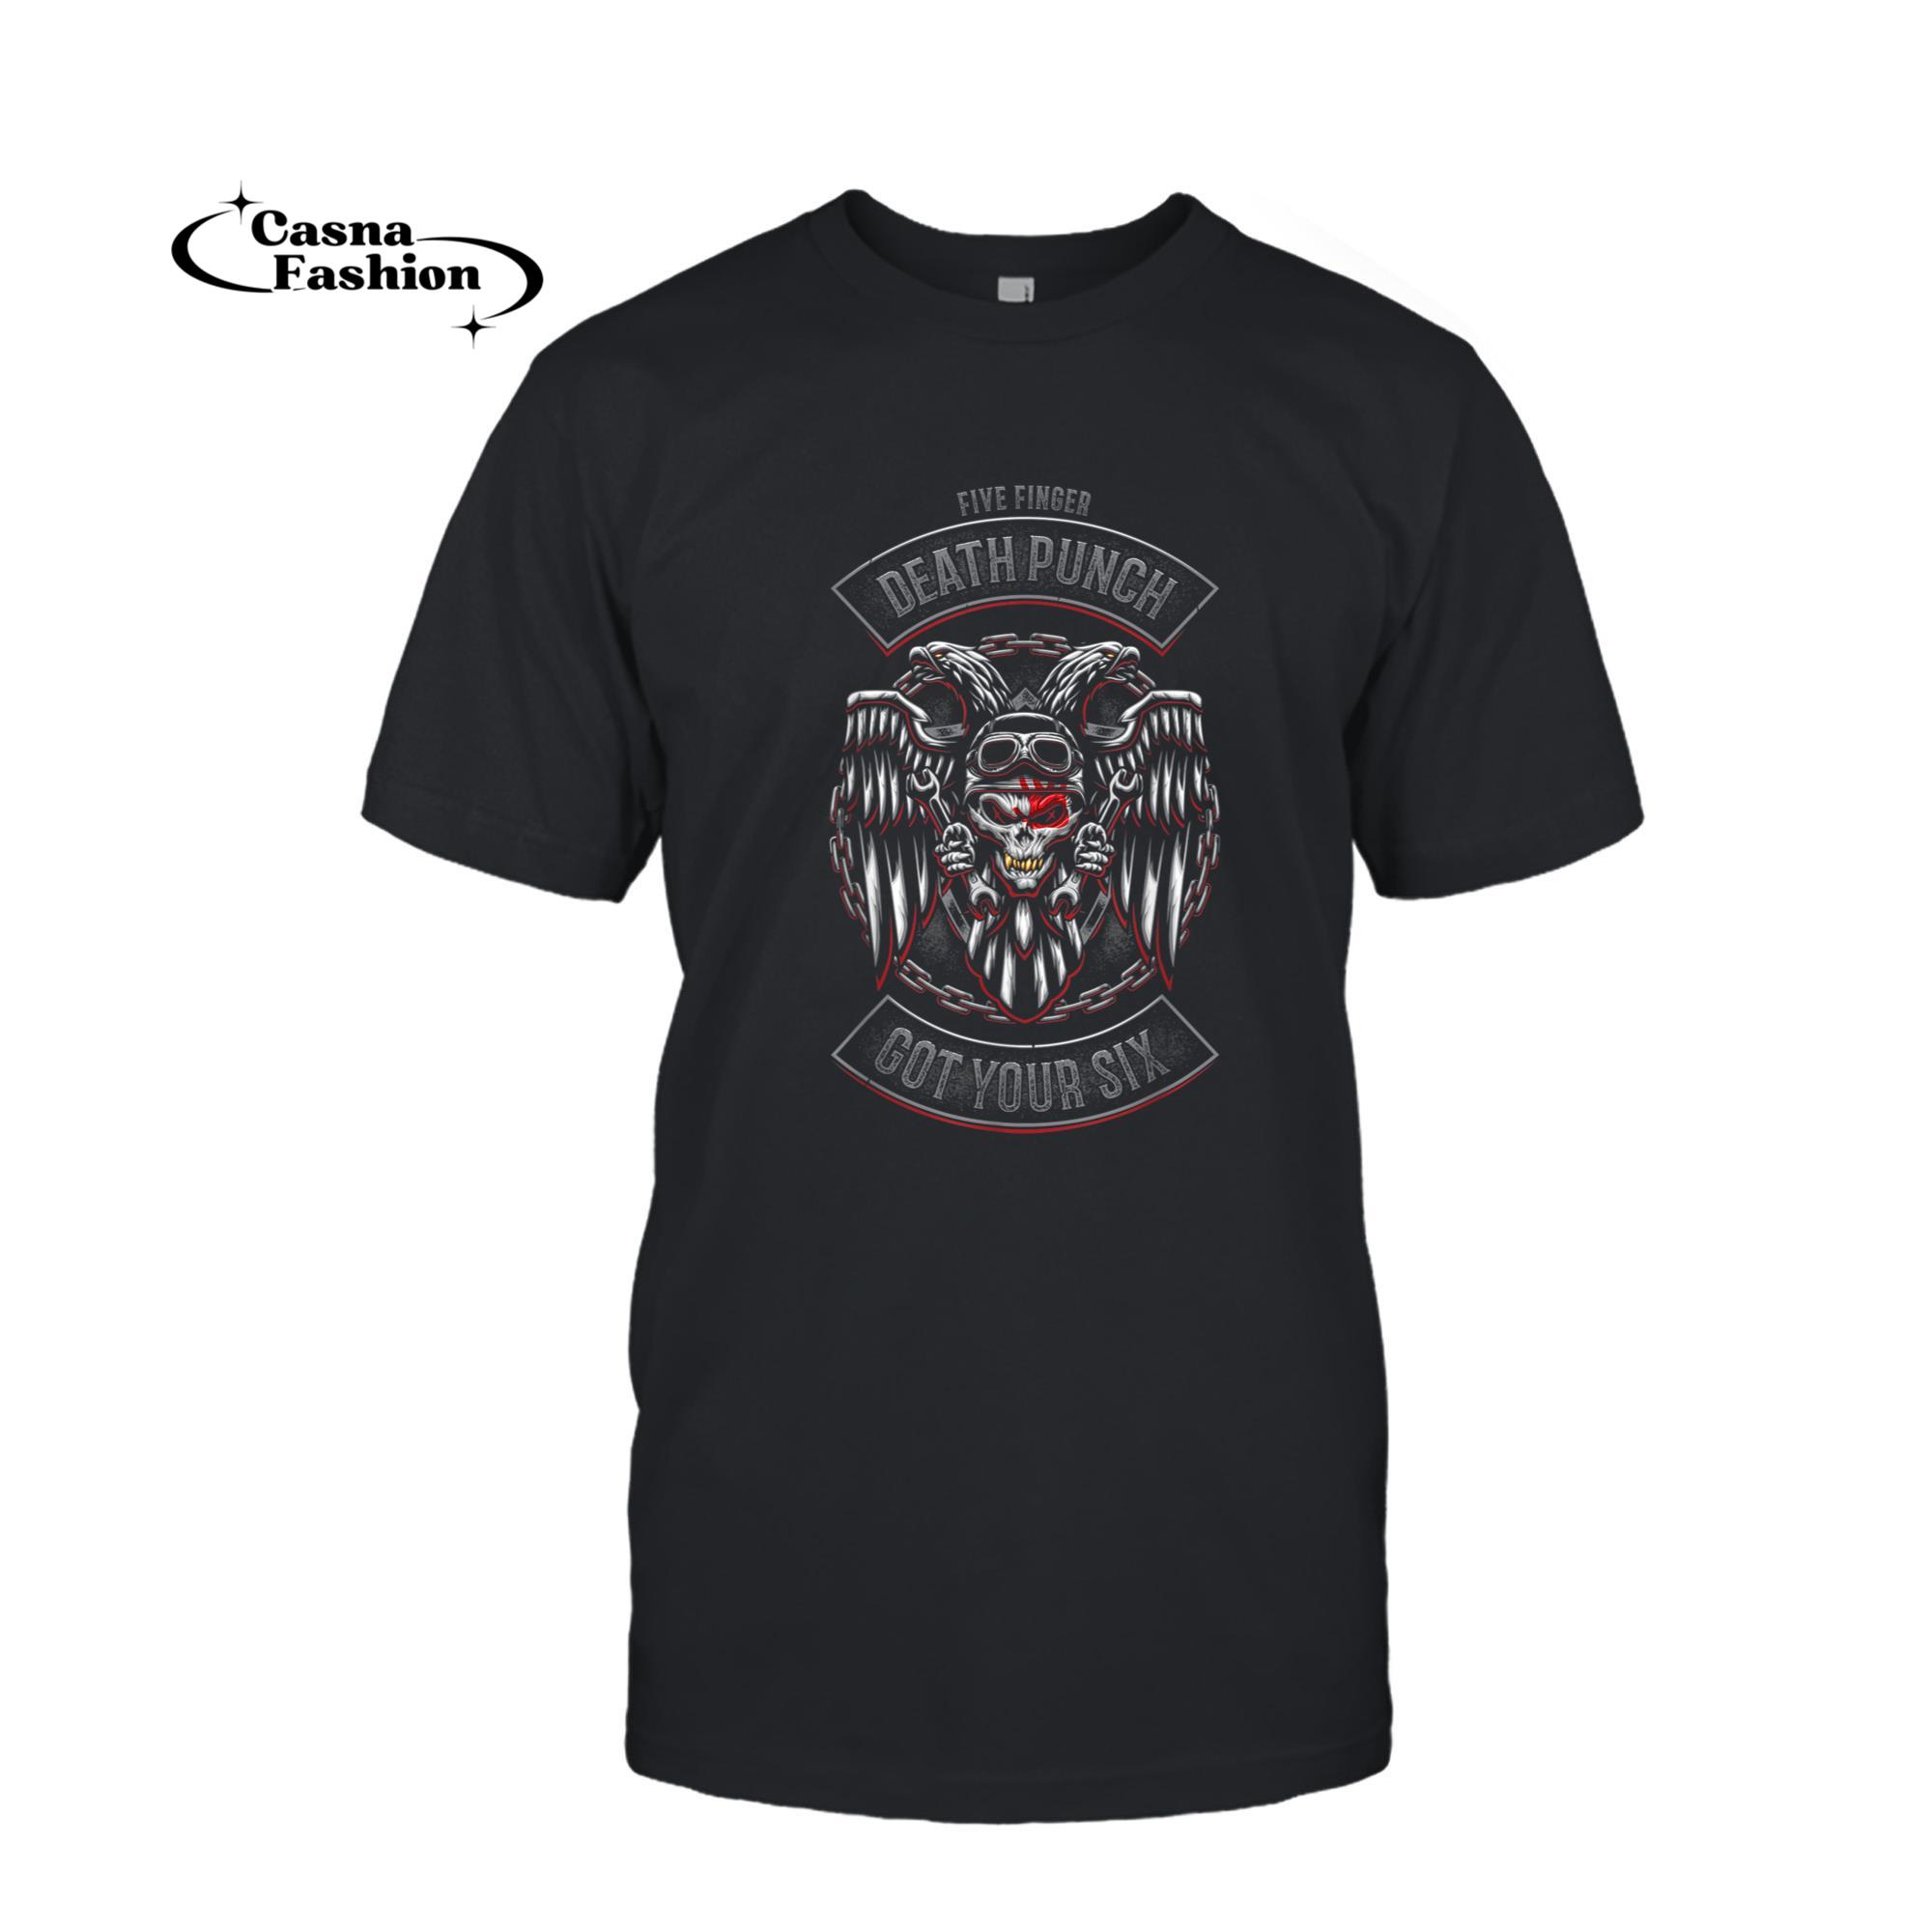 casnafashion_T-shirt_5FDP - Biker Badge - Got Your Six T-Shirt_T-shirt_Black